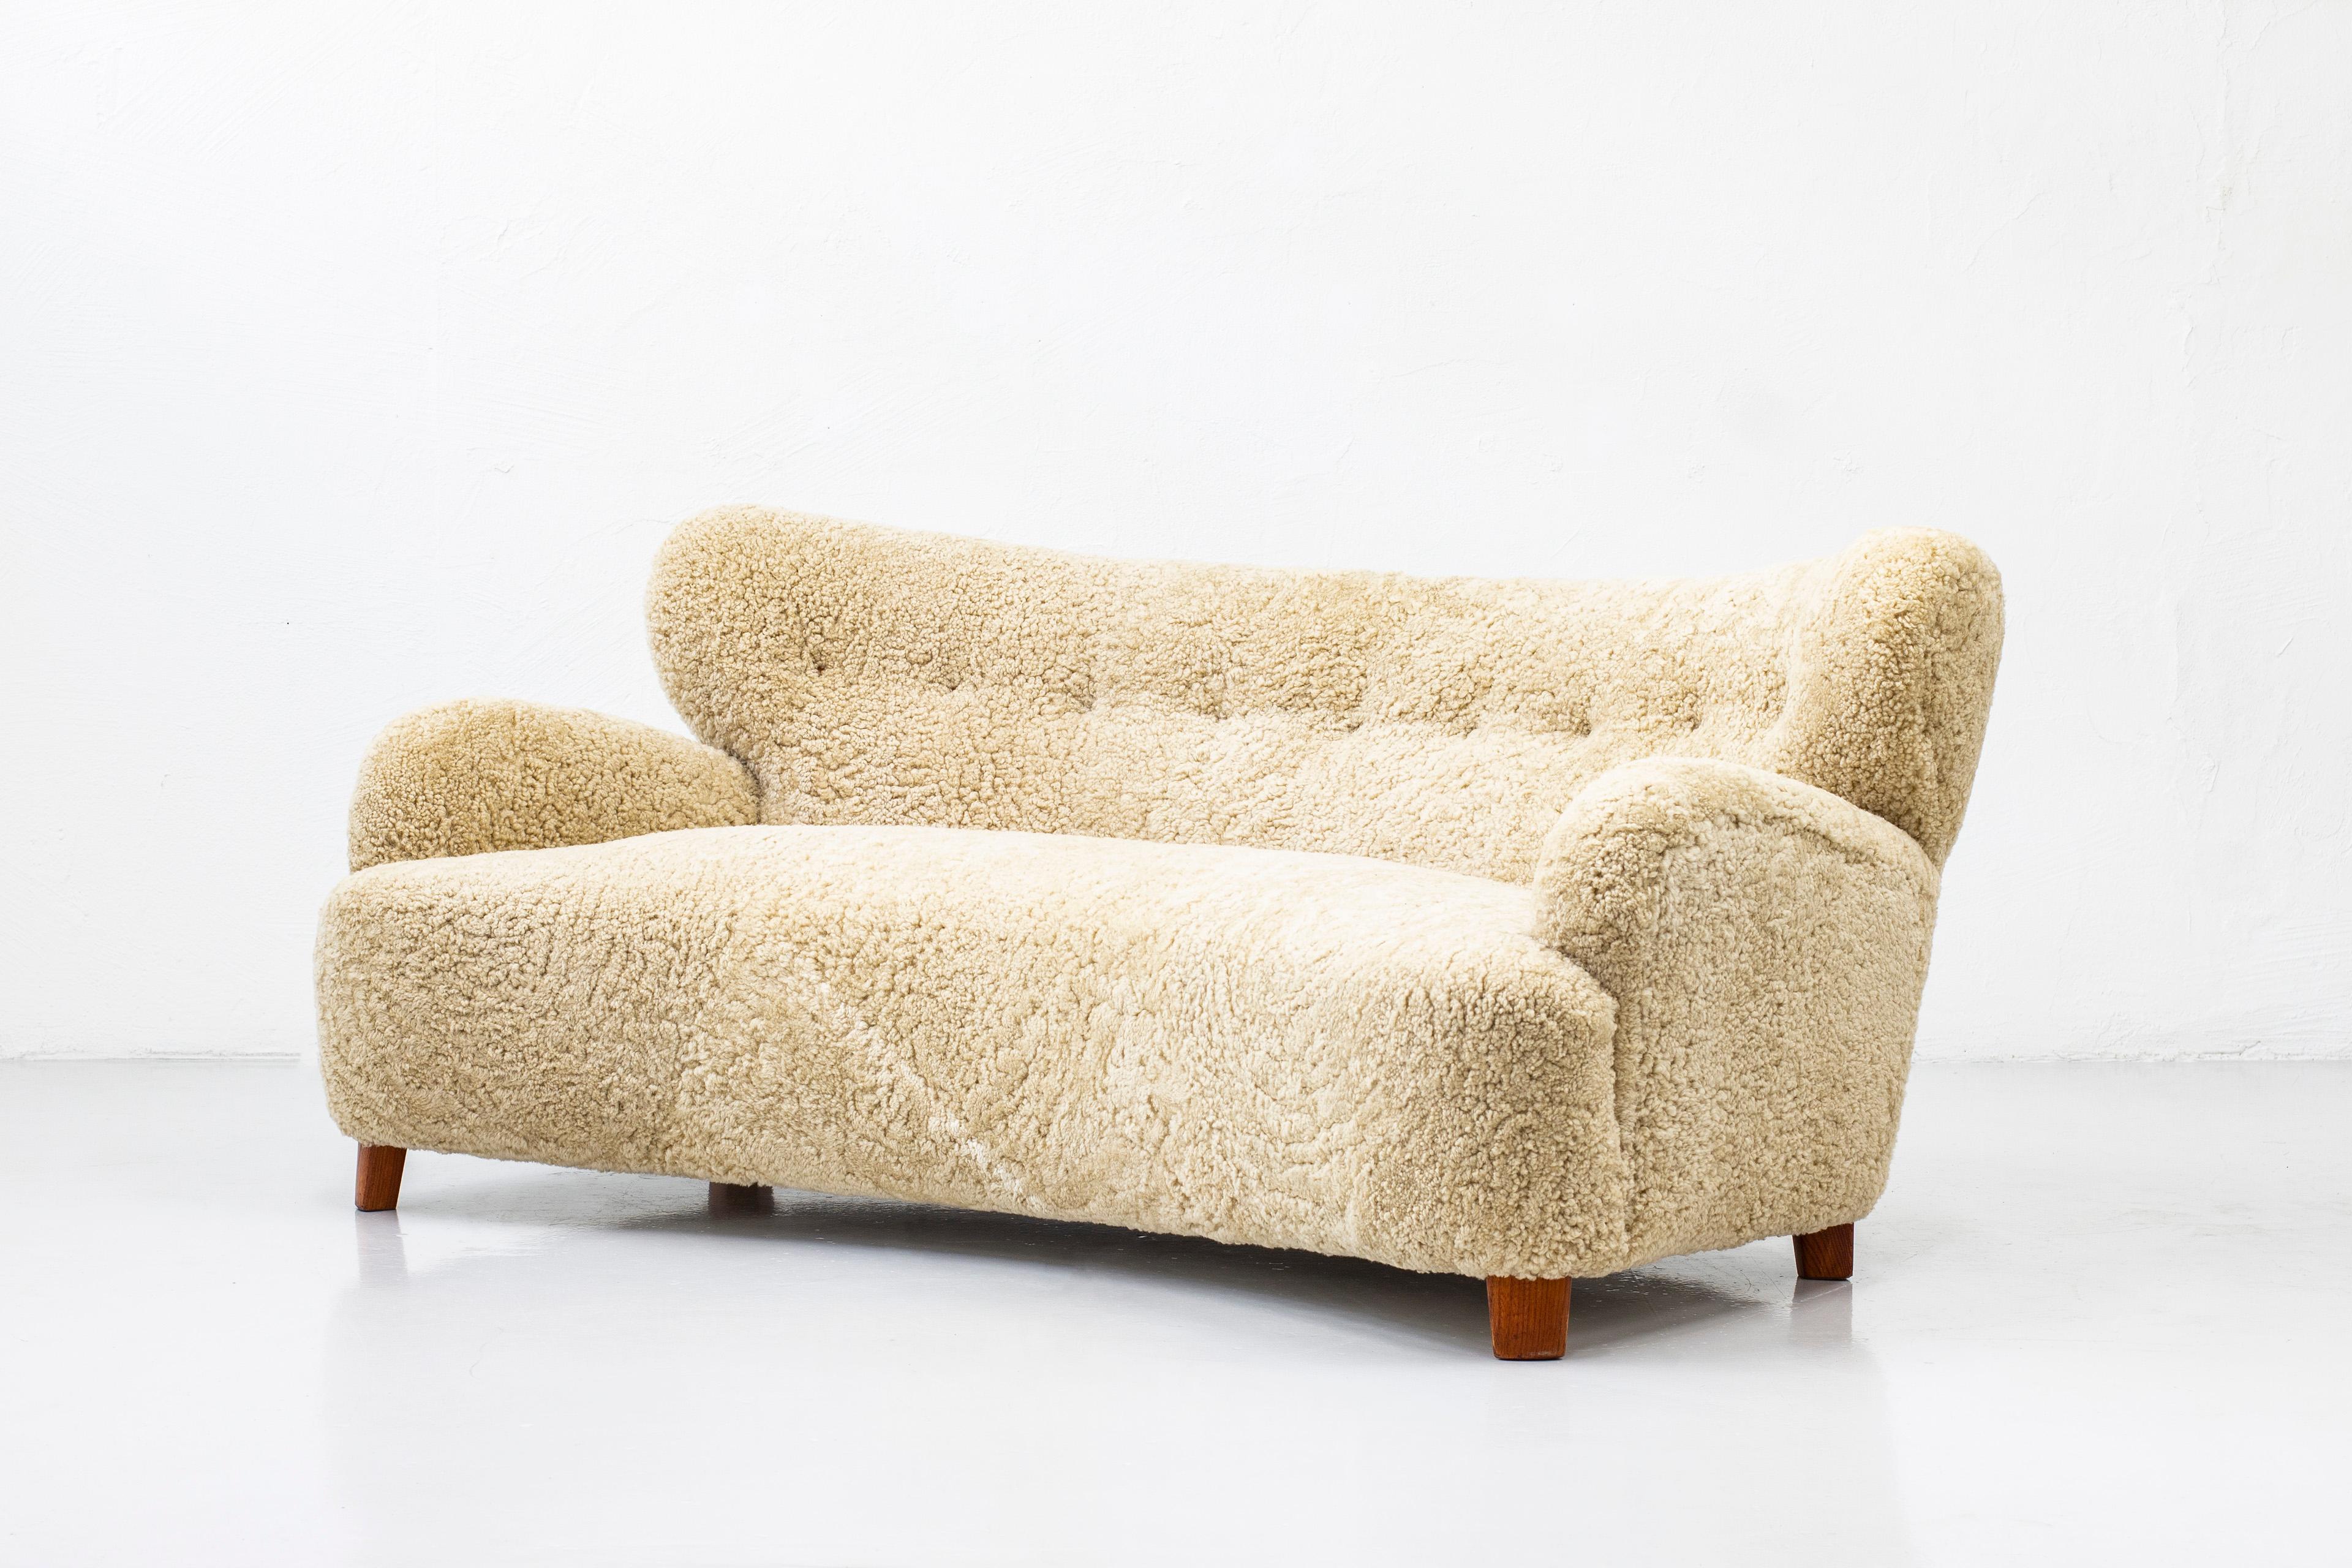 Scandinavian Modern Danish Sheep Skin Sofa Attributed to Flemming Lassen, Denmark, 1940s